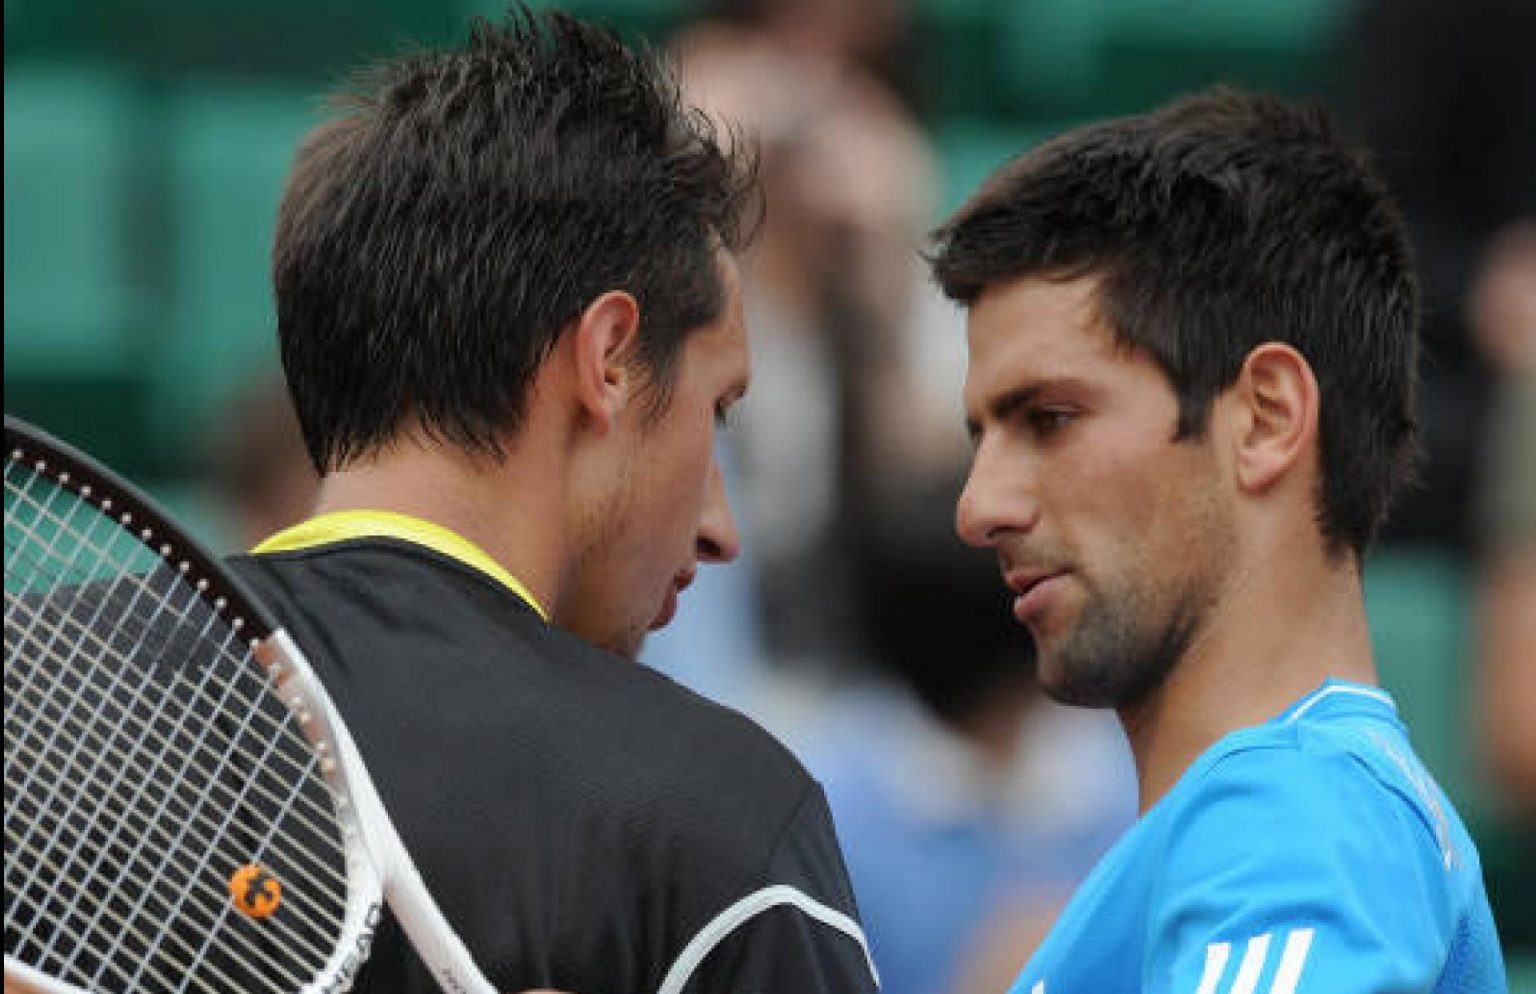 Former Ukrainian tennis player shares what Novak Djokovic did amid the Russian invasion